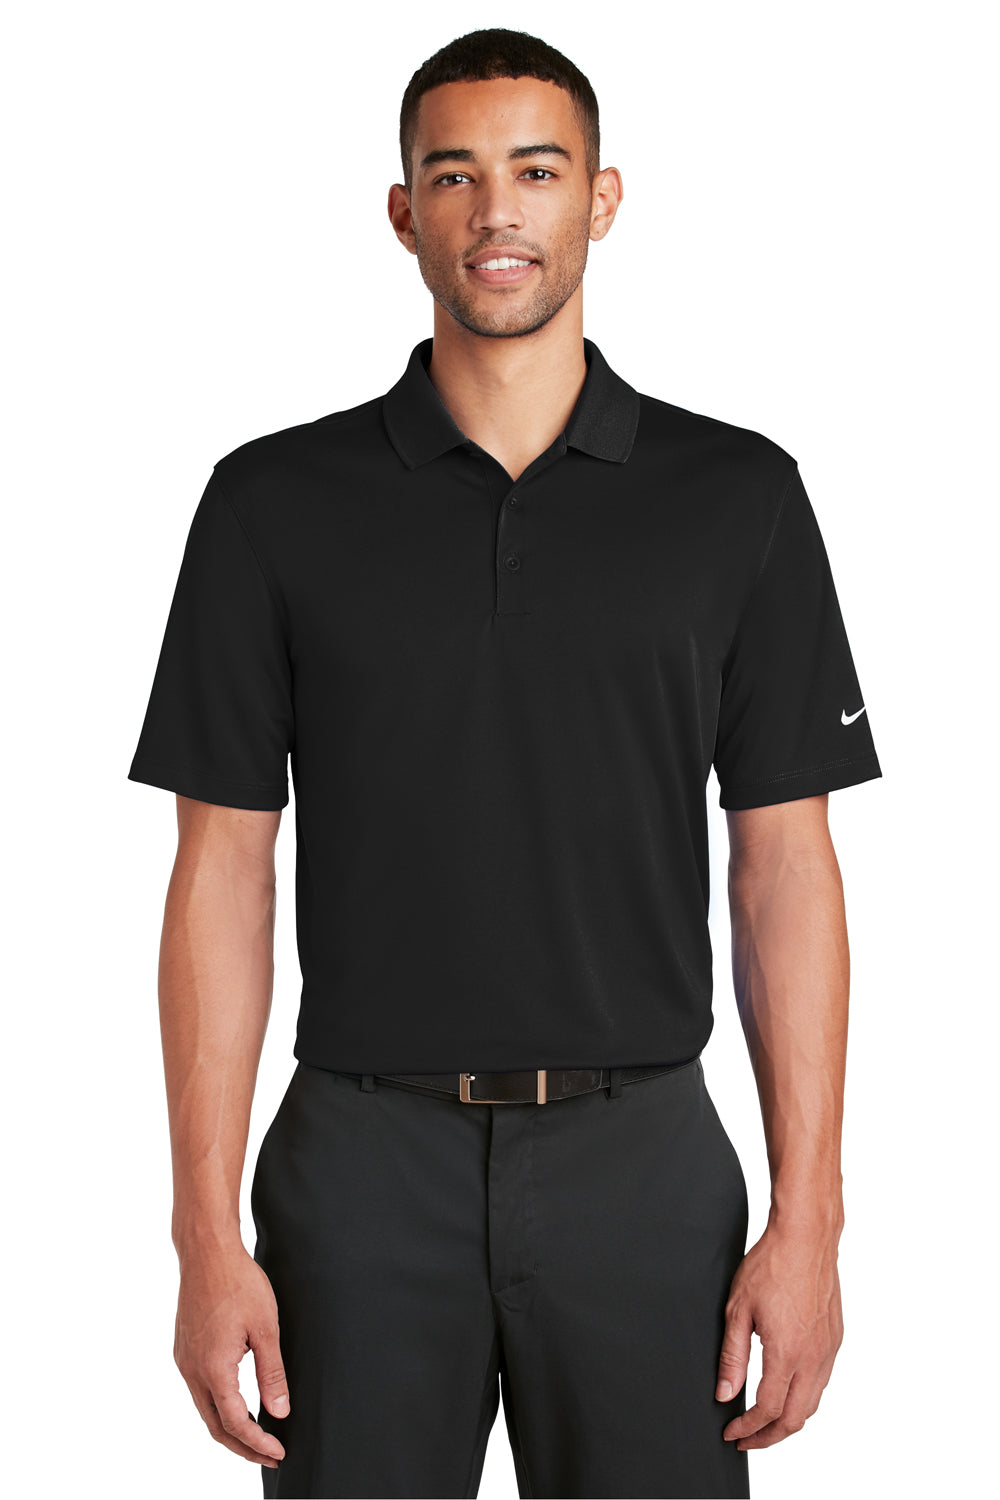 Nike 838956 Mens Players Dri-Fit Moisture Wicking Short Sleeve Polo Shirt Black Model Front